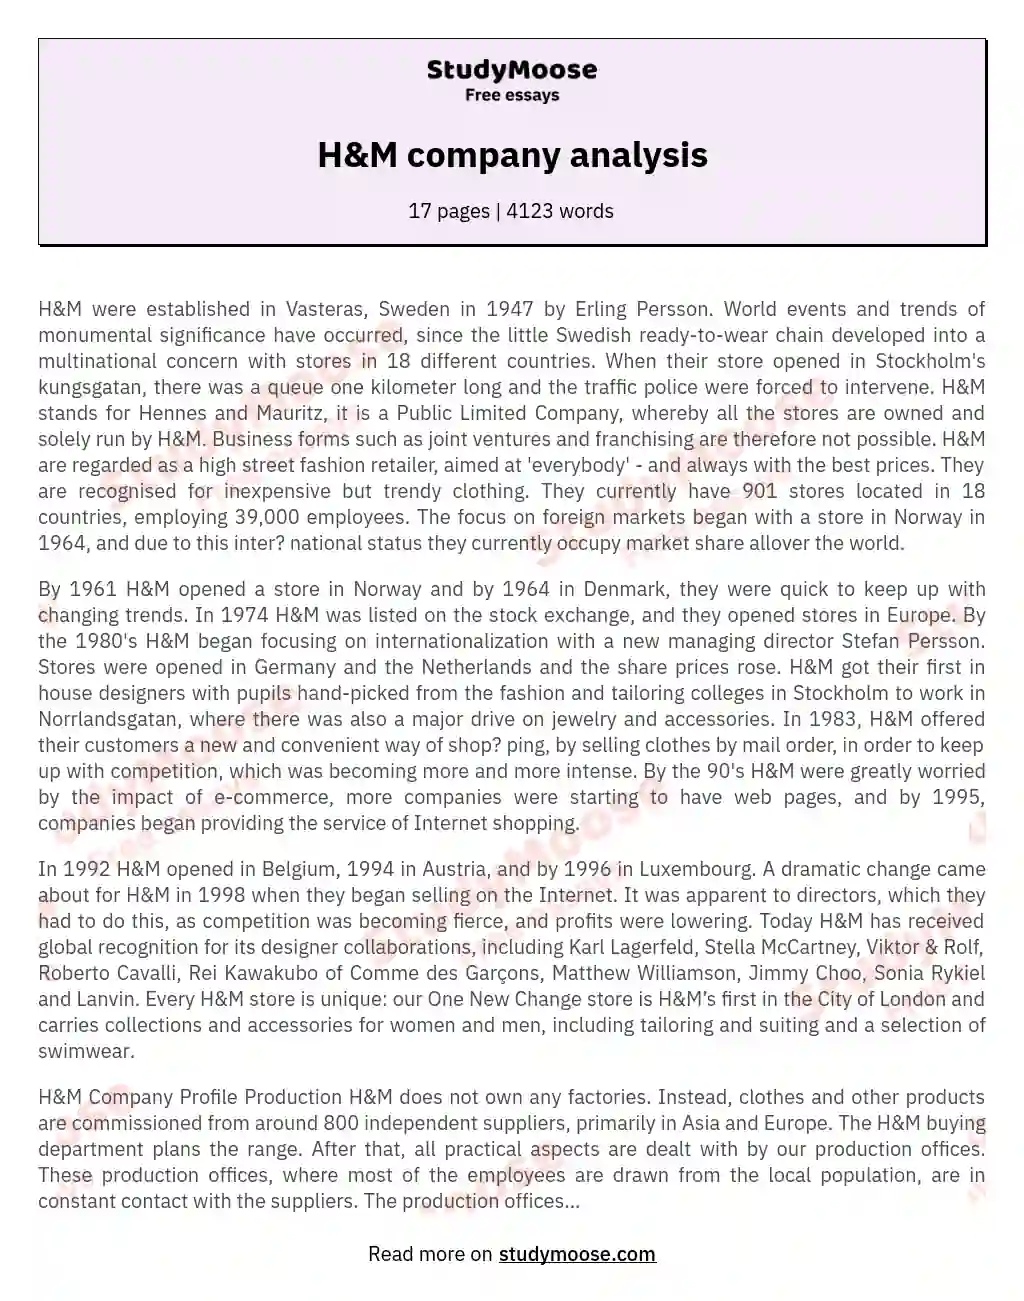 H&M company analysis essay